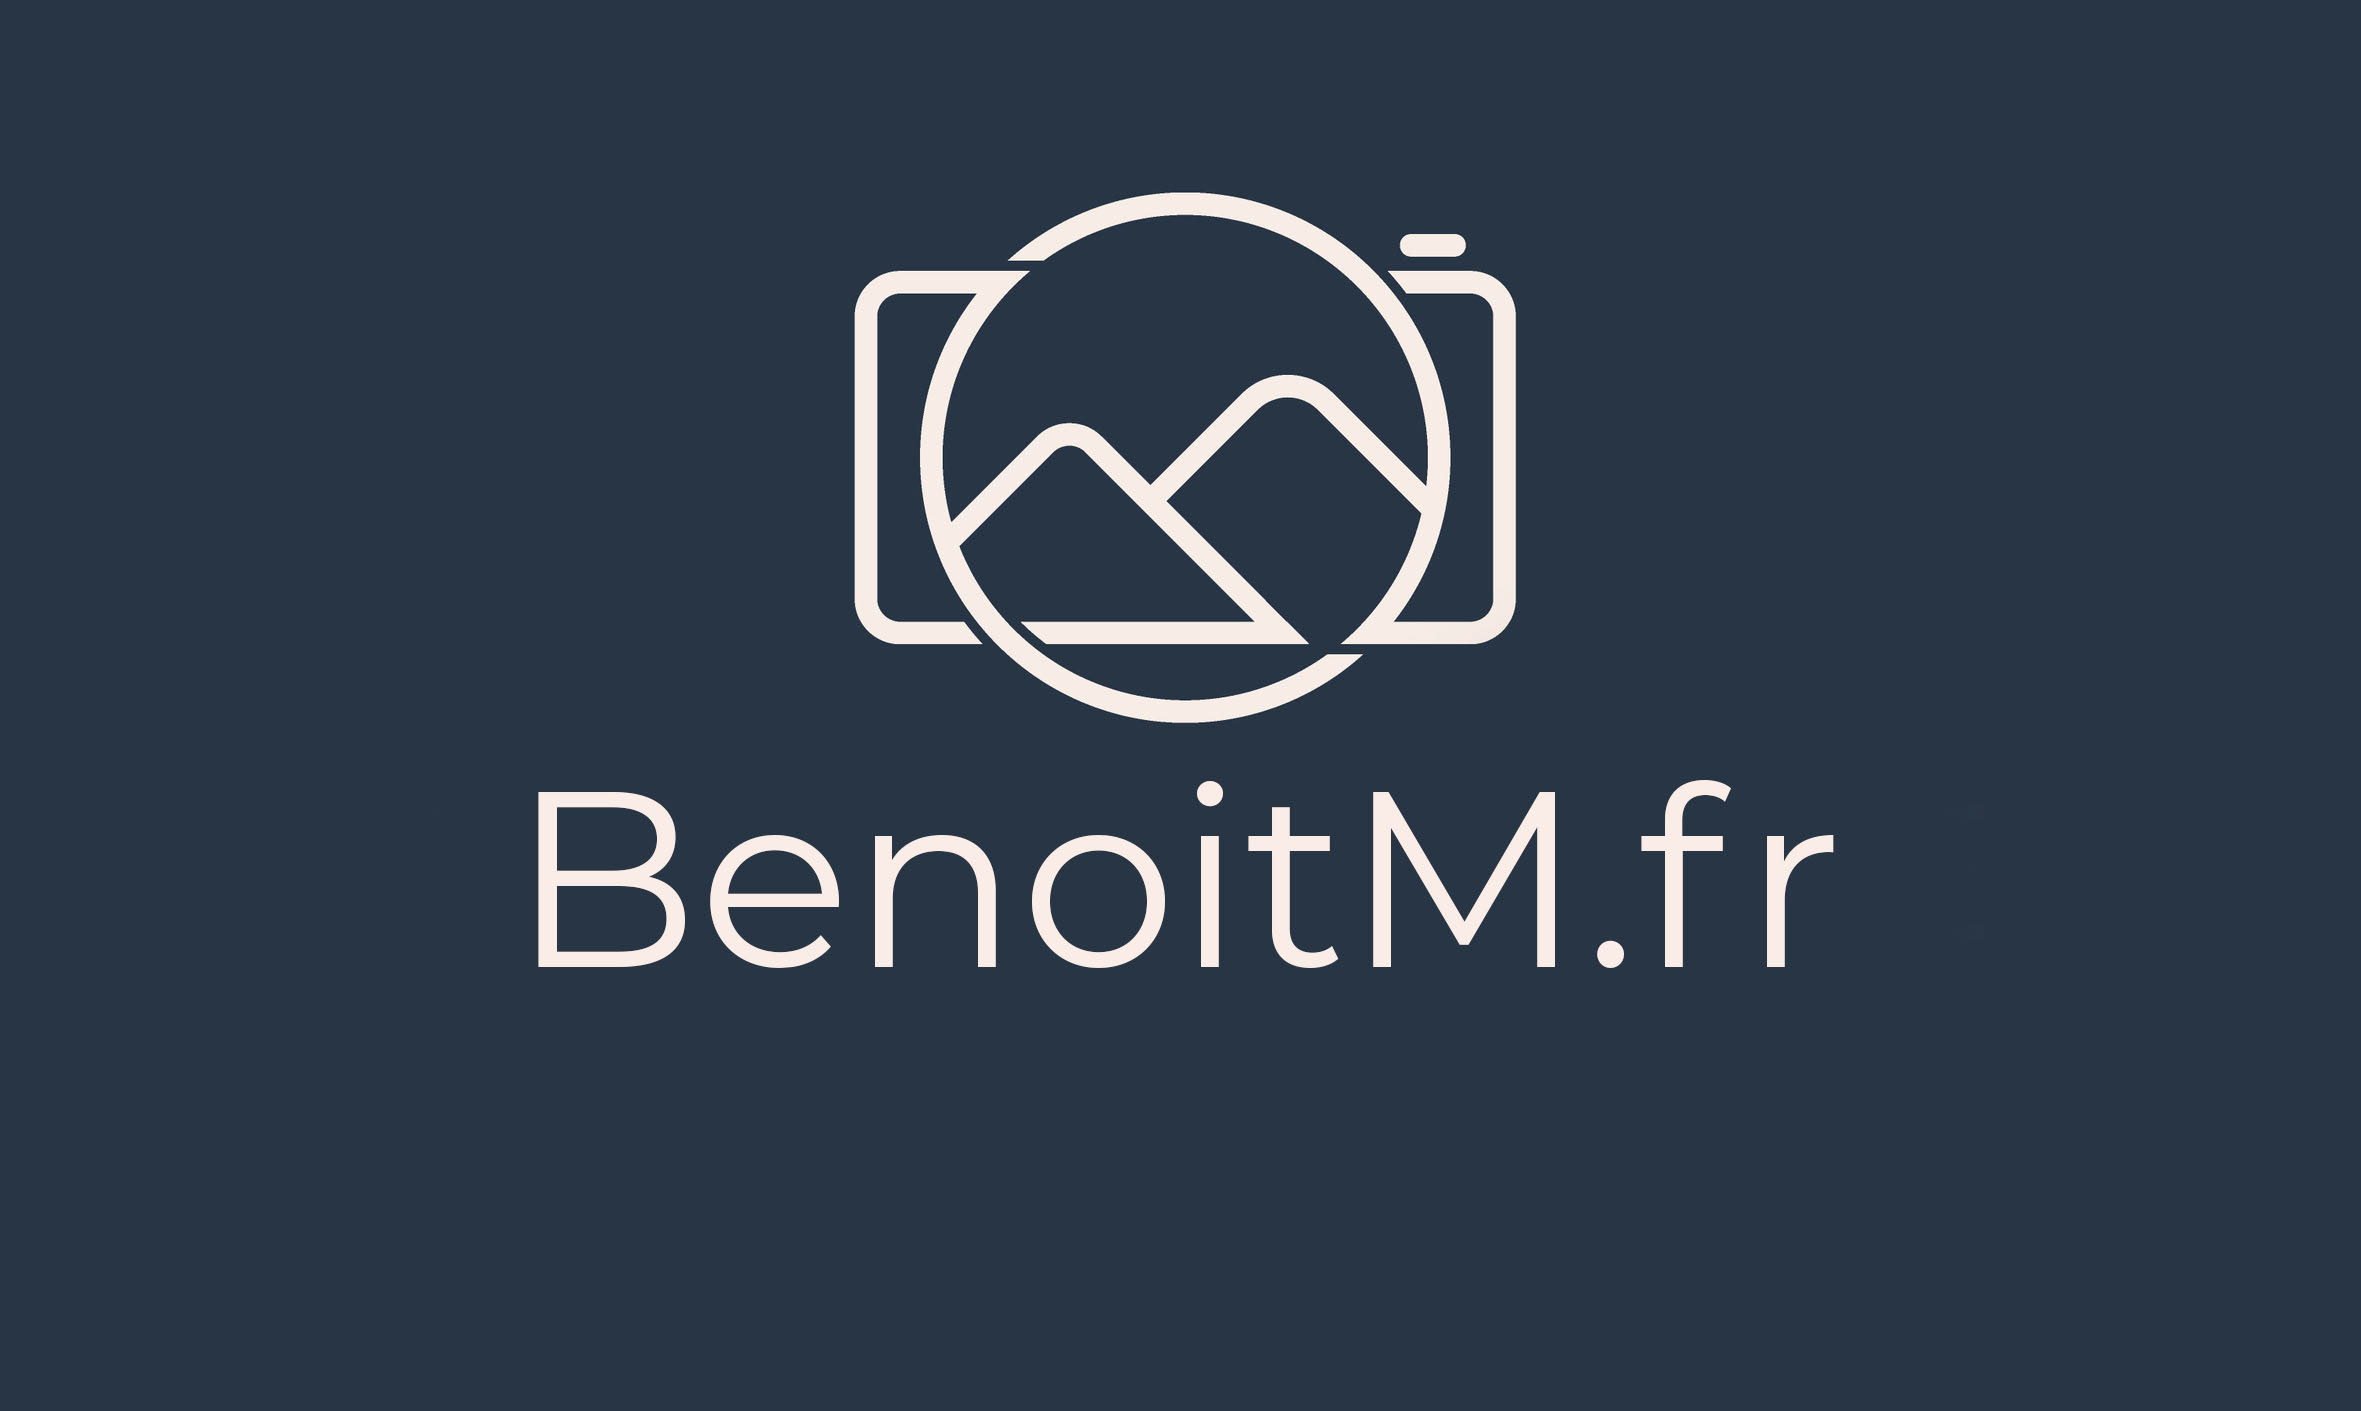 Benoit M